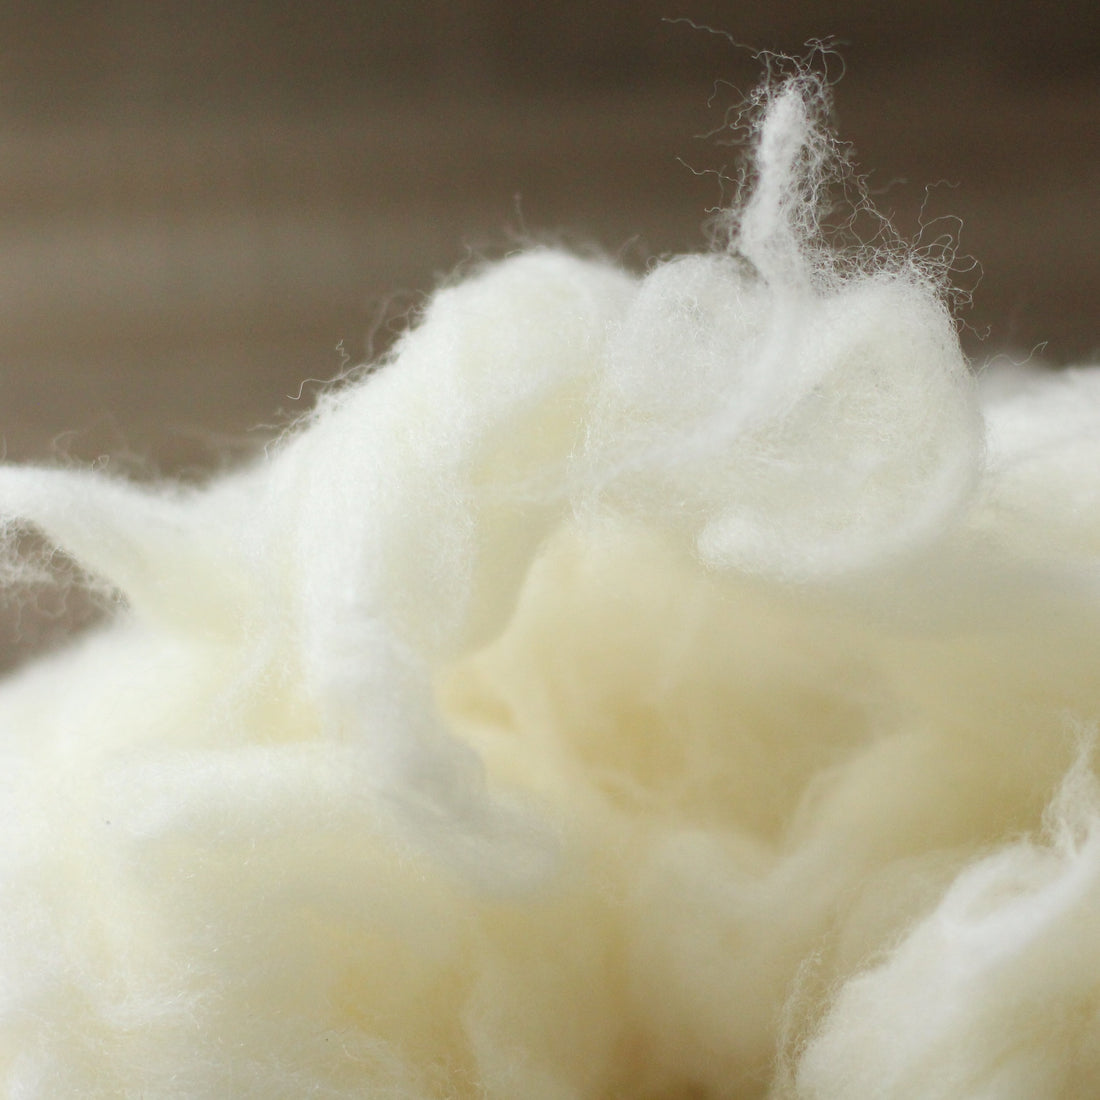 Wool Filling (Stuffing)